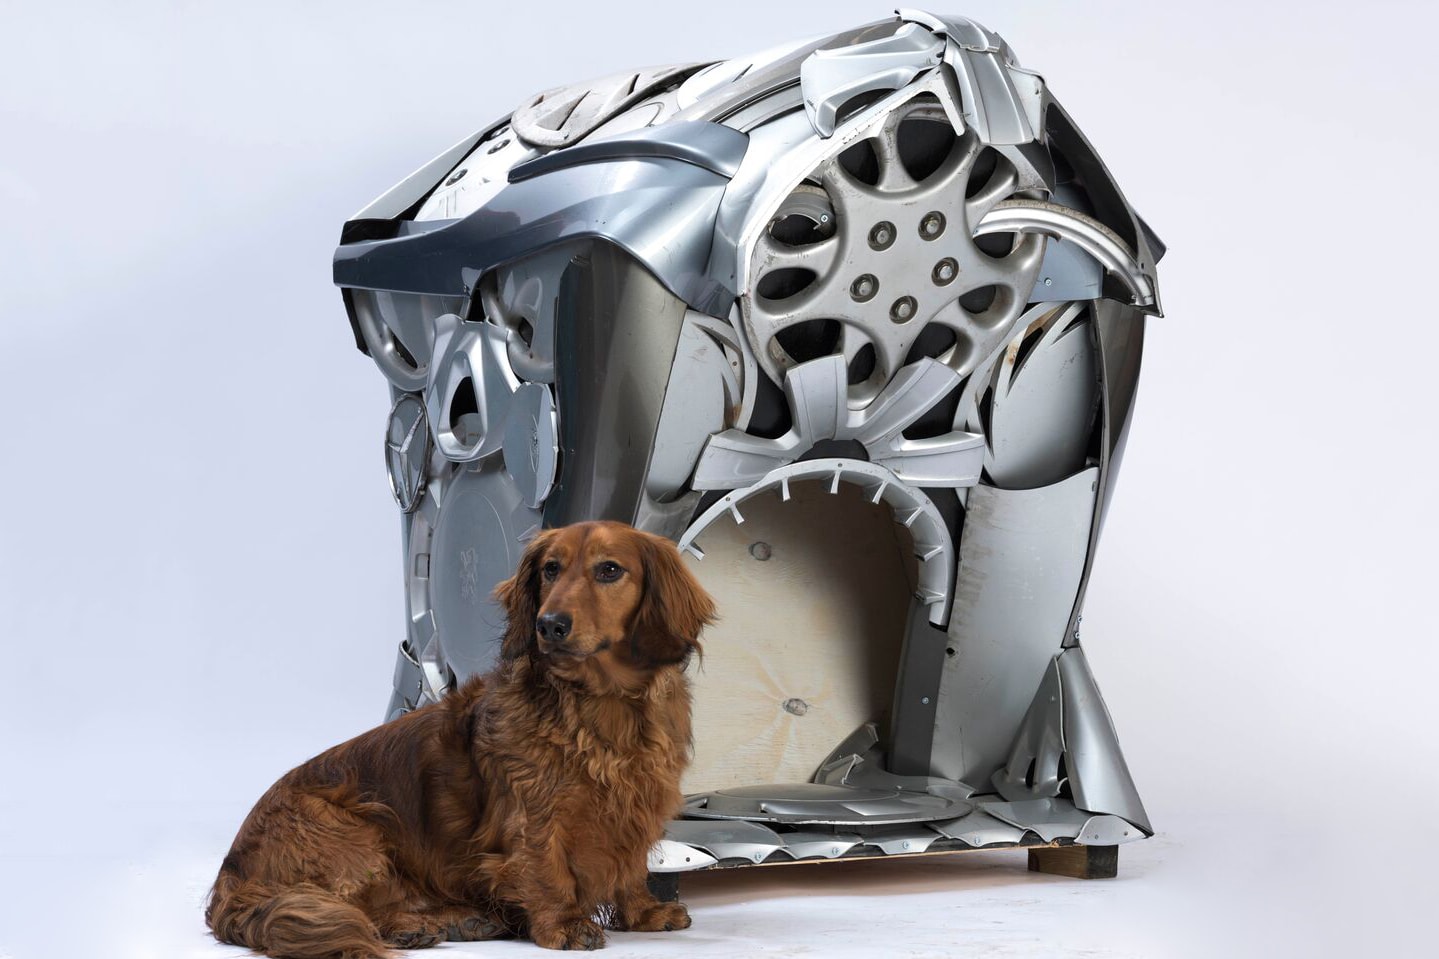 zaha hadid architects spark octopi dog kennels bowwow haus london pets dogs canines design